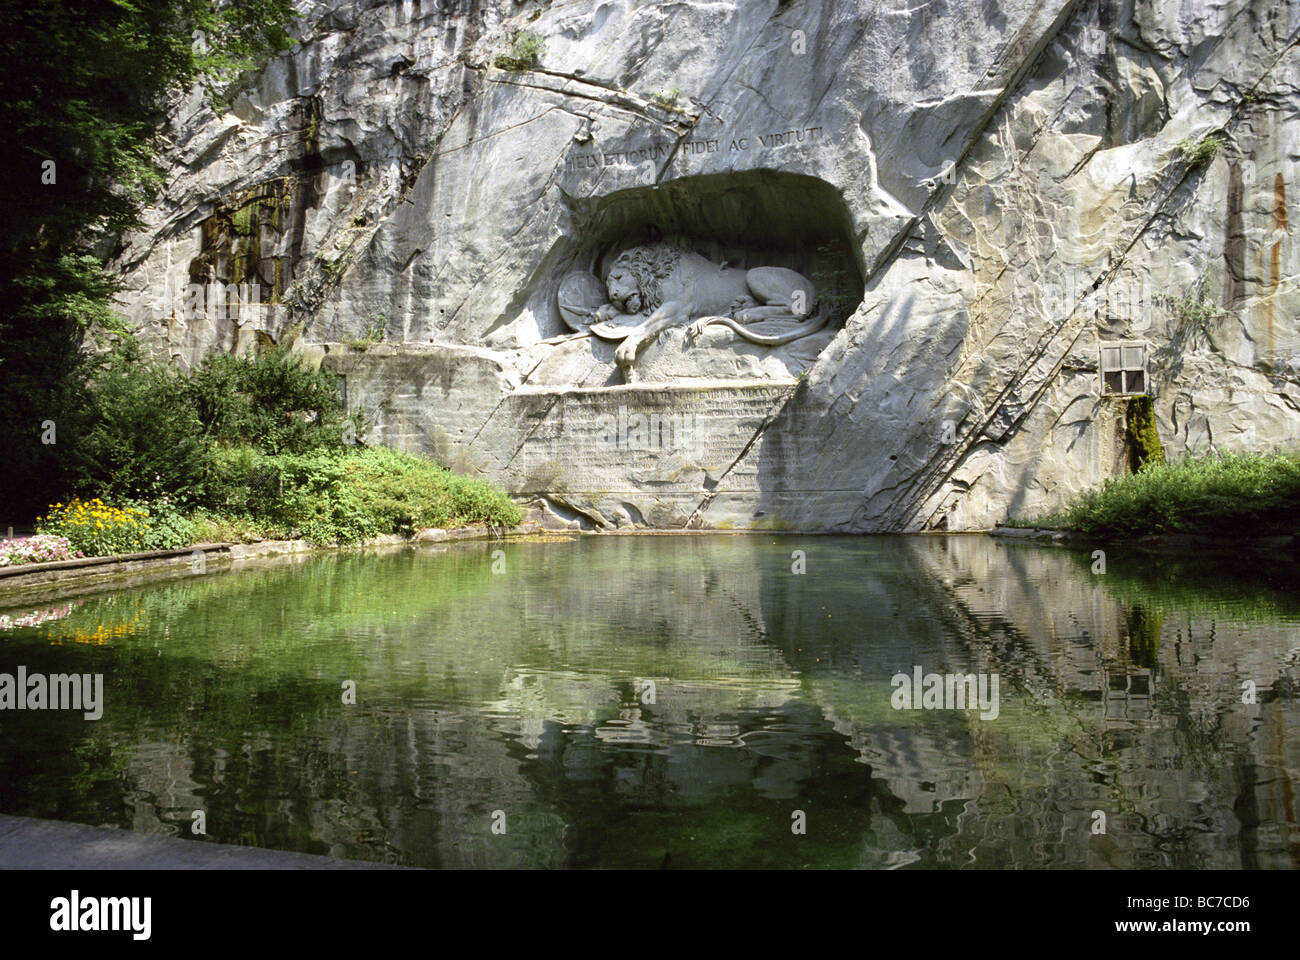 The Lion of Lucerne monument, designed by Bertel Thorvaldsen, in Lucerne, Central Switzerland Stock Photo